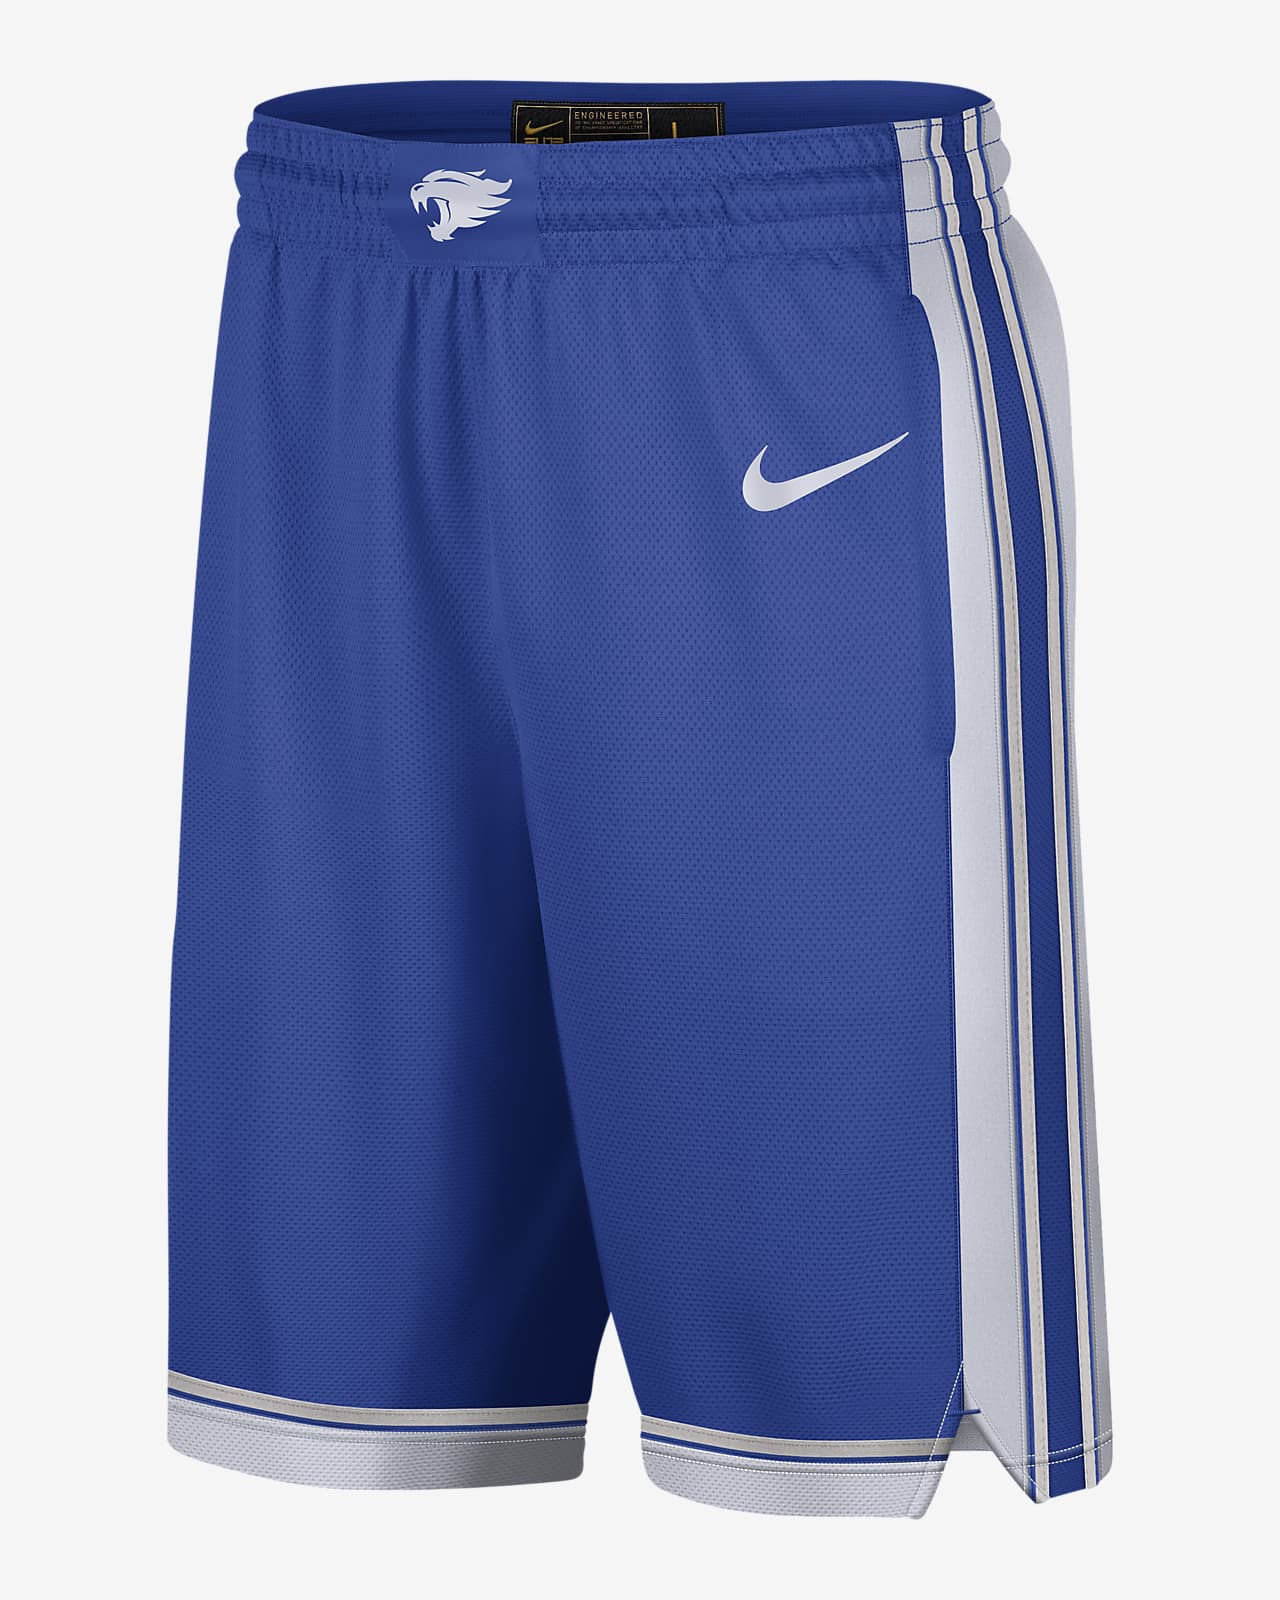 Kentucky Road Men's Nike College Basketball Replica Shorts